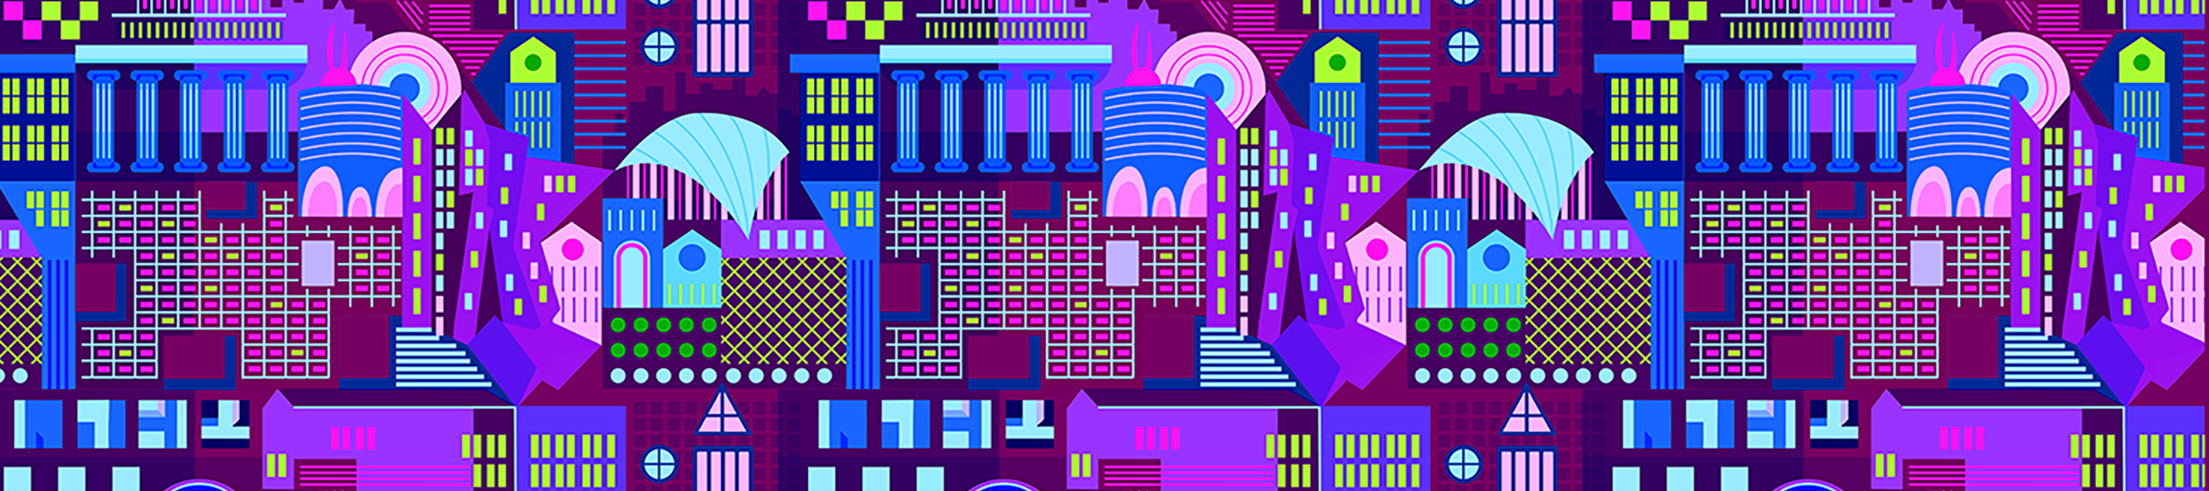 multi-colored design element with images representing MIT campus buildings